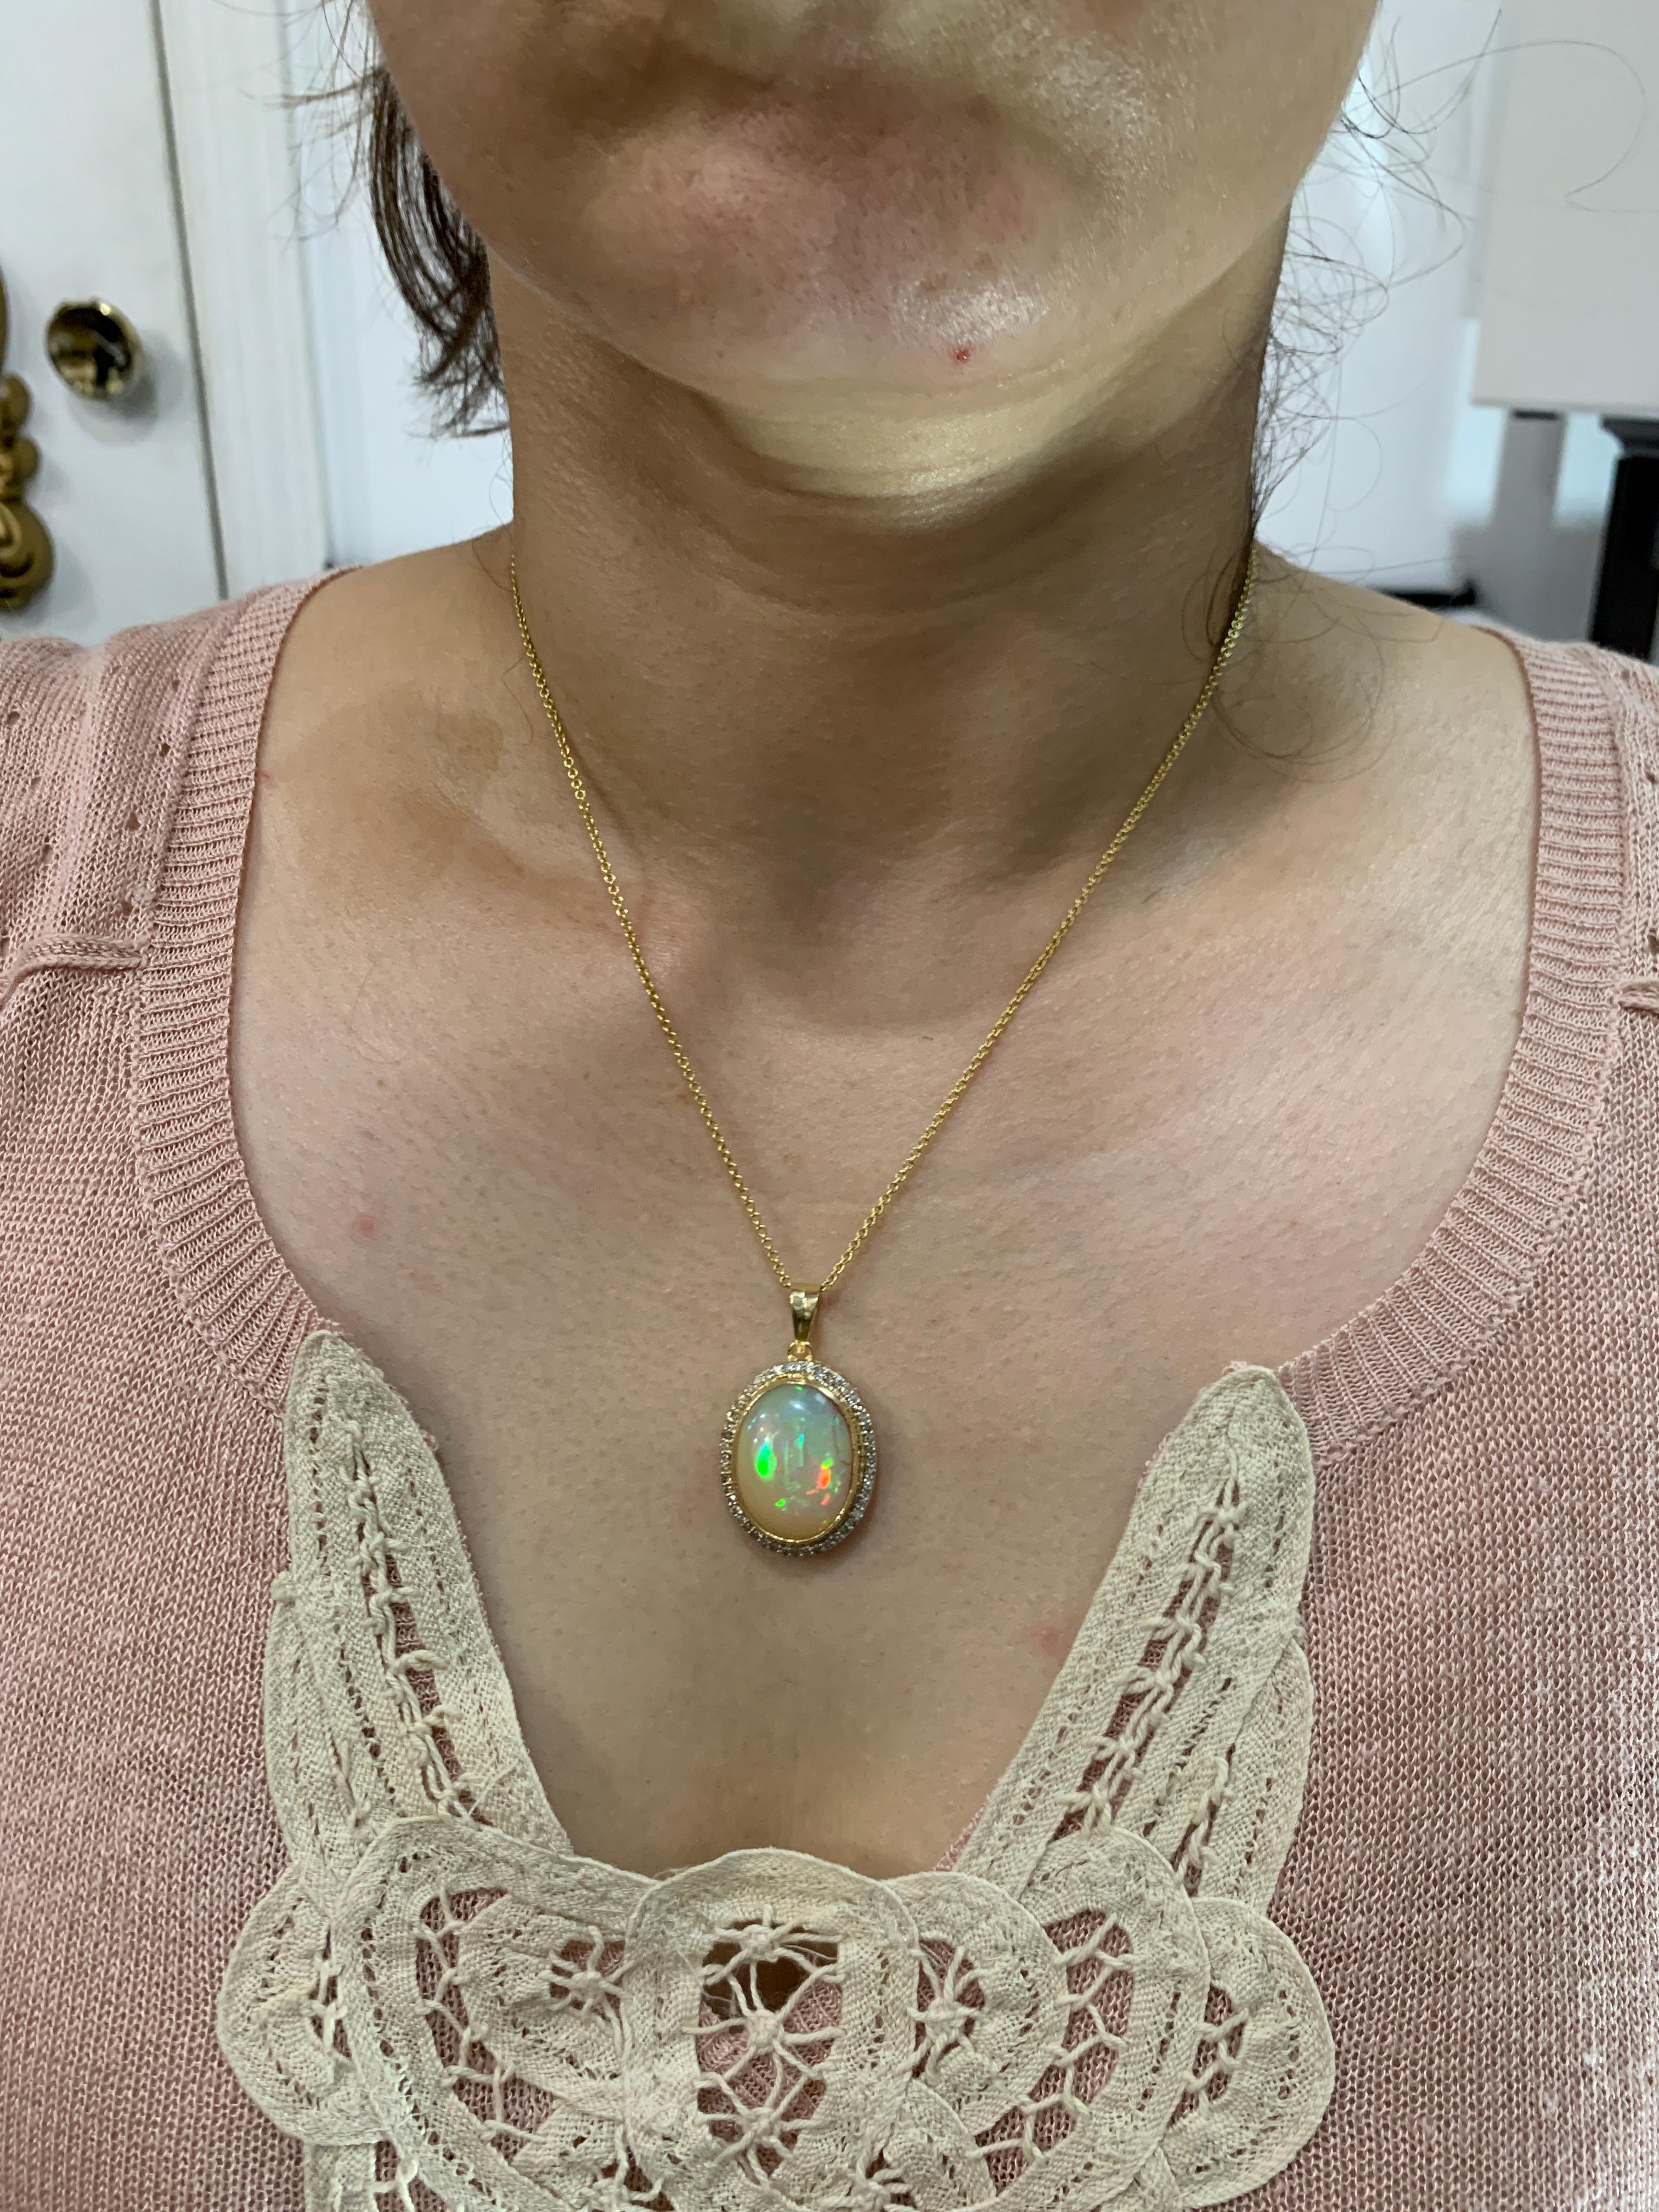 14 Carat Oval Ethiopian Opal and Diamond Pendant / Necklace 18 K Gold Necklace 10